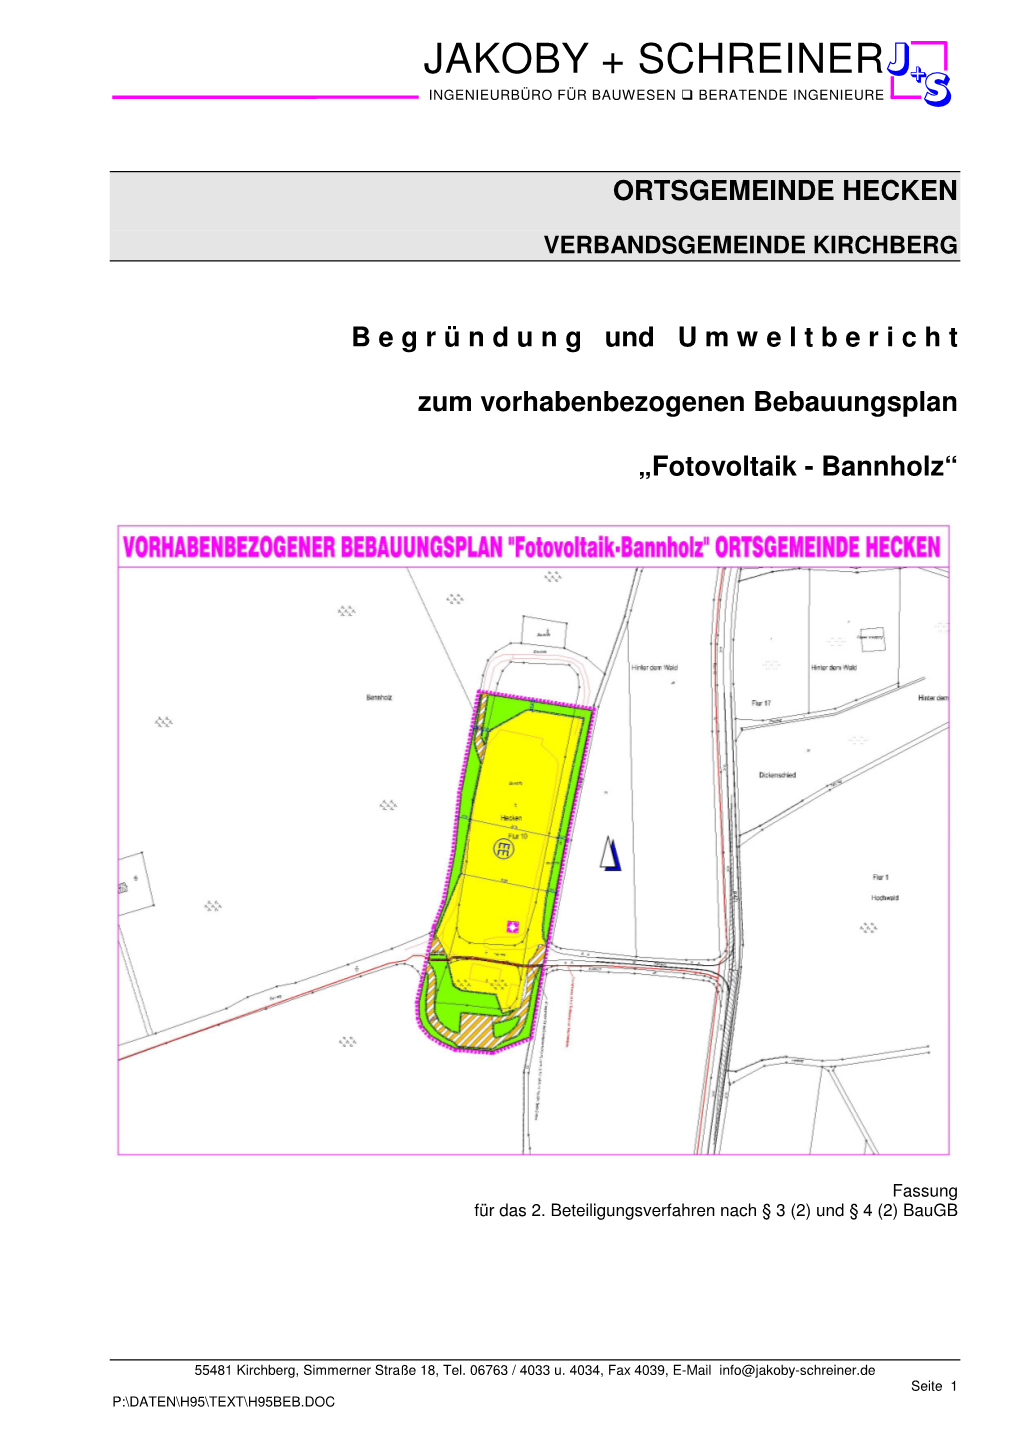 V-Bebauungsplan-Fotovoltaik Bannholz-Begründung